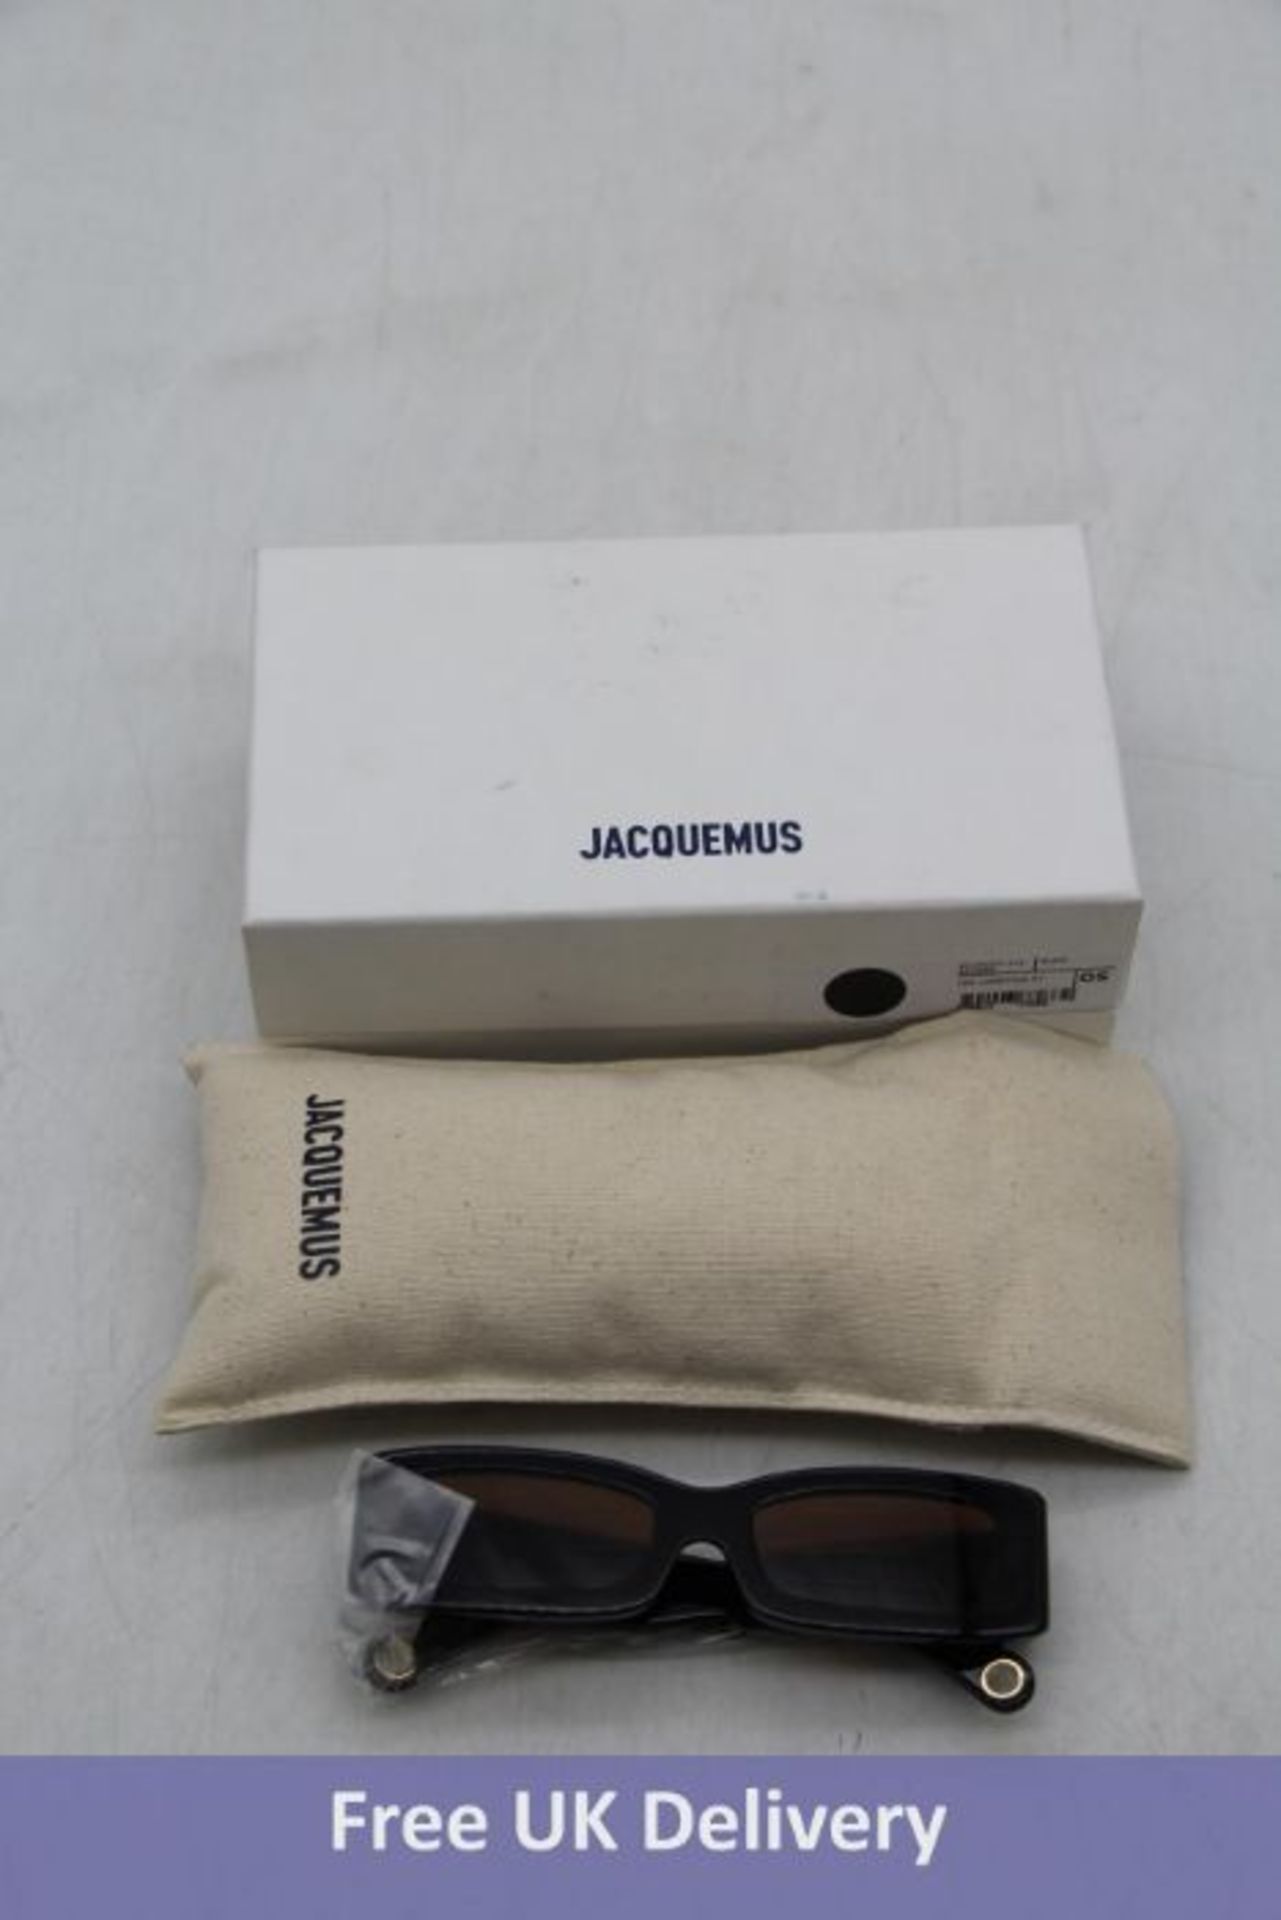 Jacquemus, Les Lunettes 97 Sunglasses, Black, Brown. Marks to box